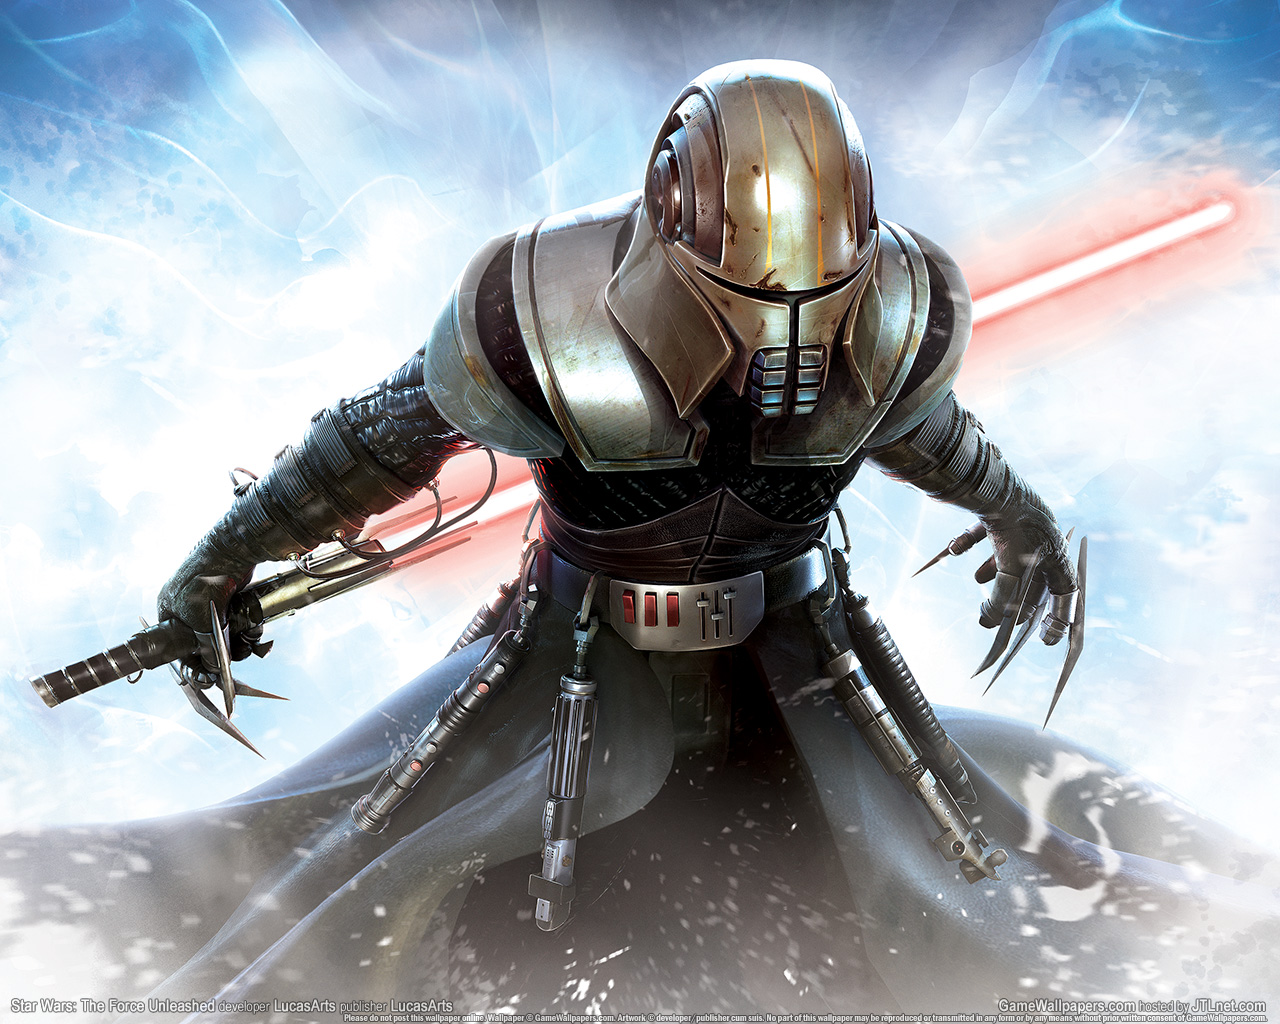 Star Wars Star Wars The Force Unleashed jeu vidéo Jeux